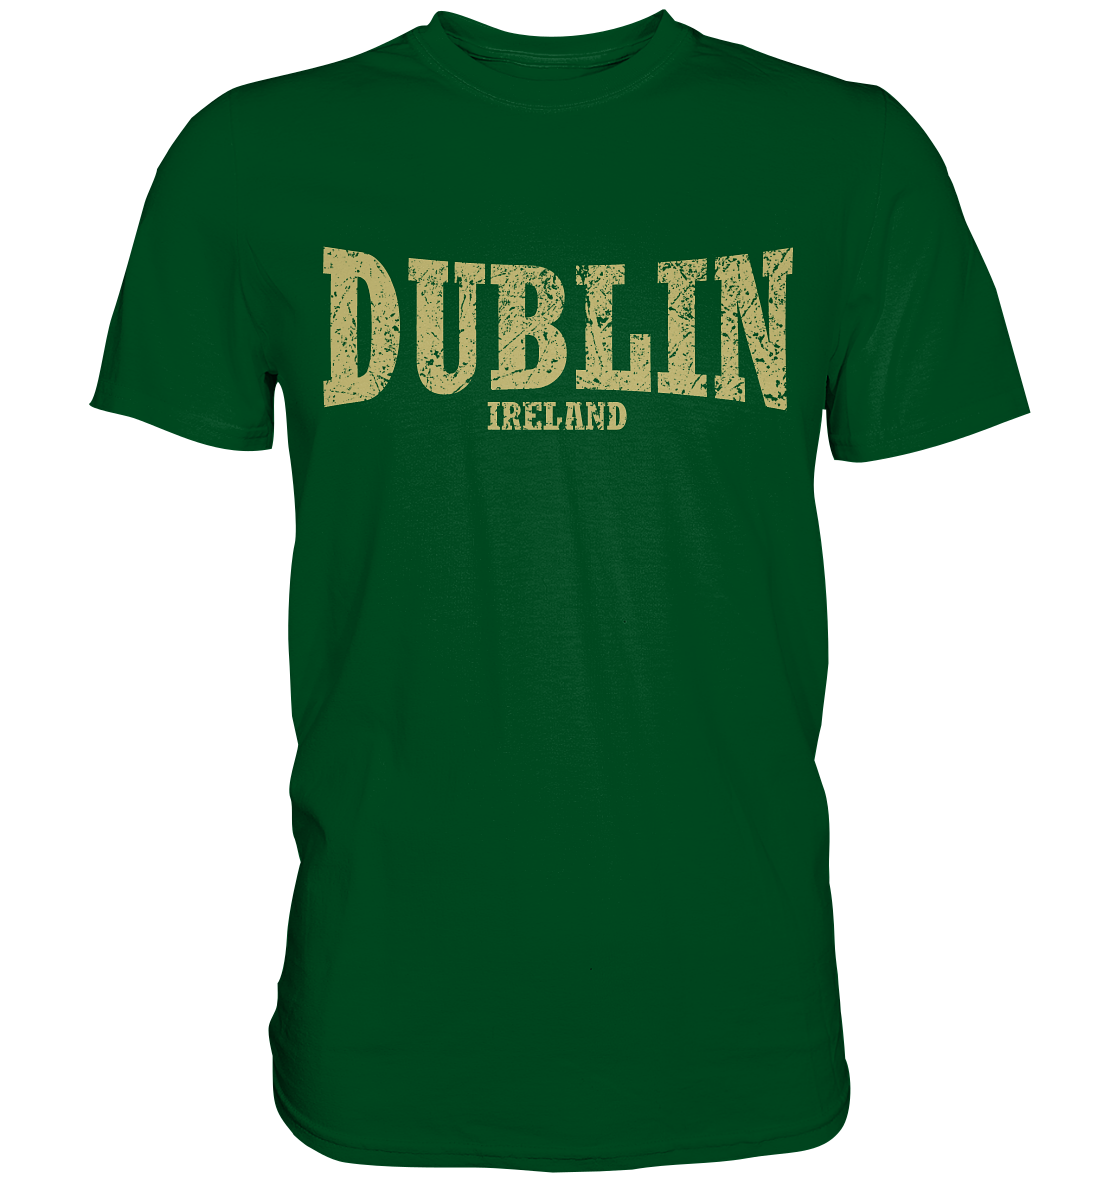 Dublin "Ireland" - Premium Shirt